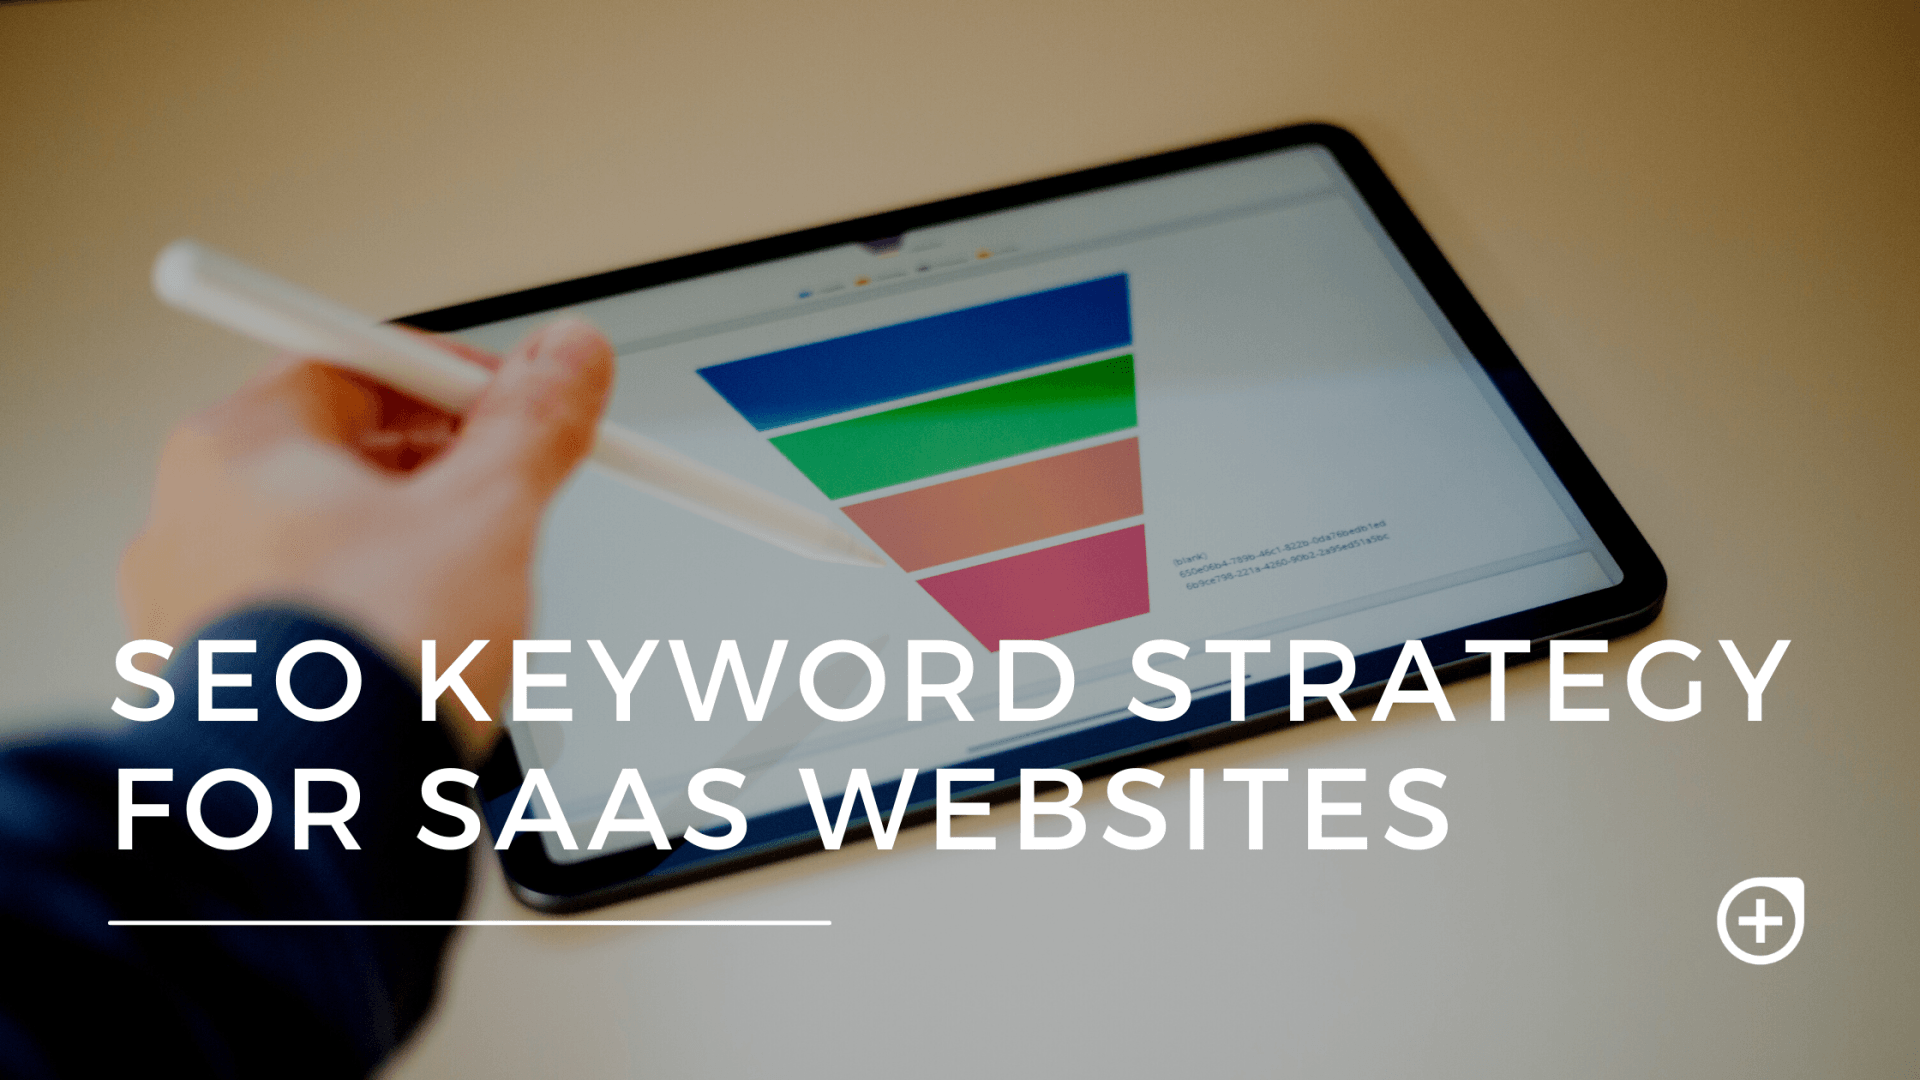 SEO Keyword Strategy for SaaS Websites